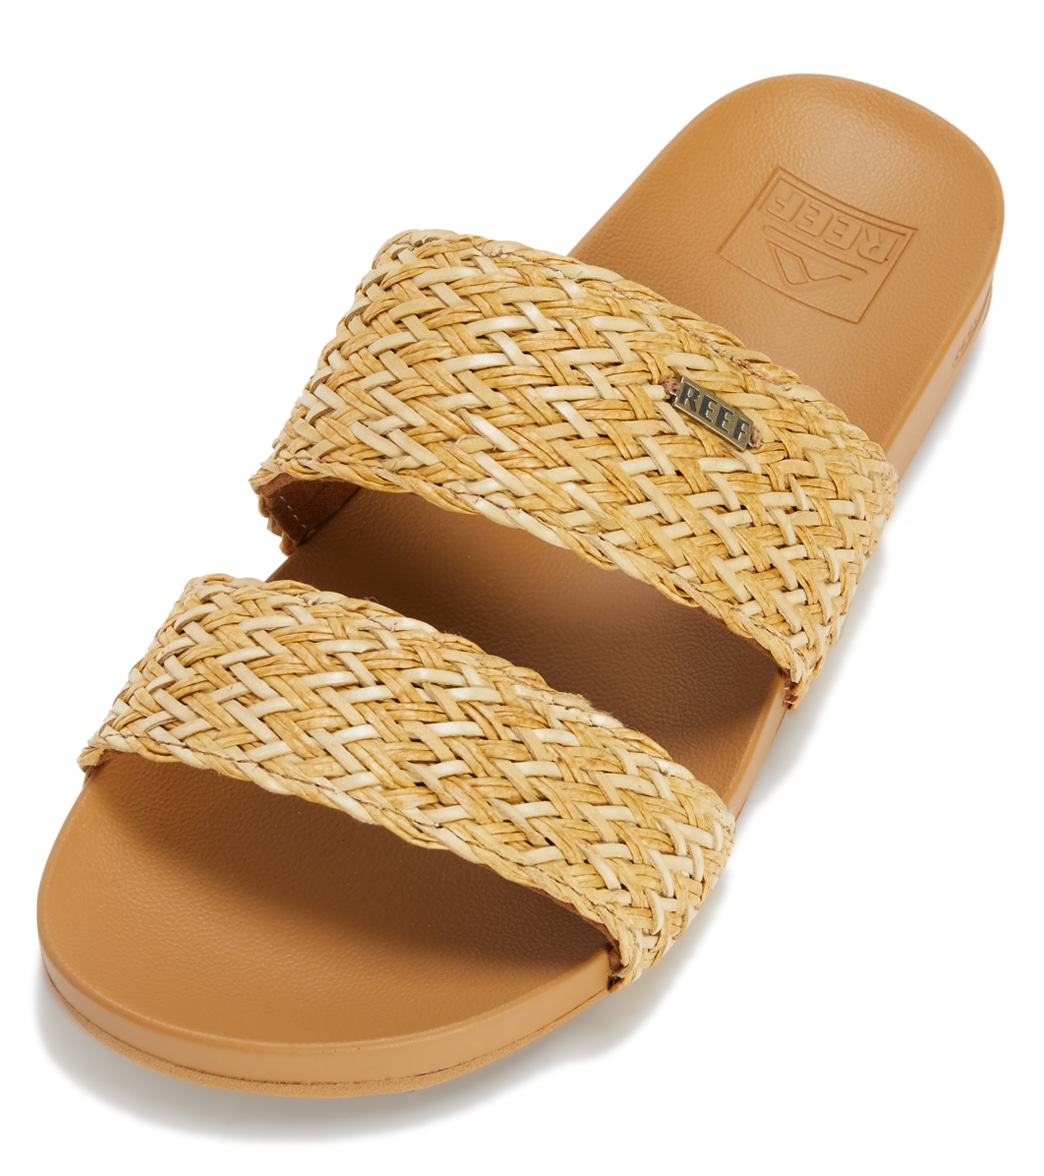 Reef Women's Cushion Vista Braid Sandals - Natural 5 - Swimoutlet.com